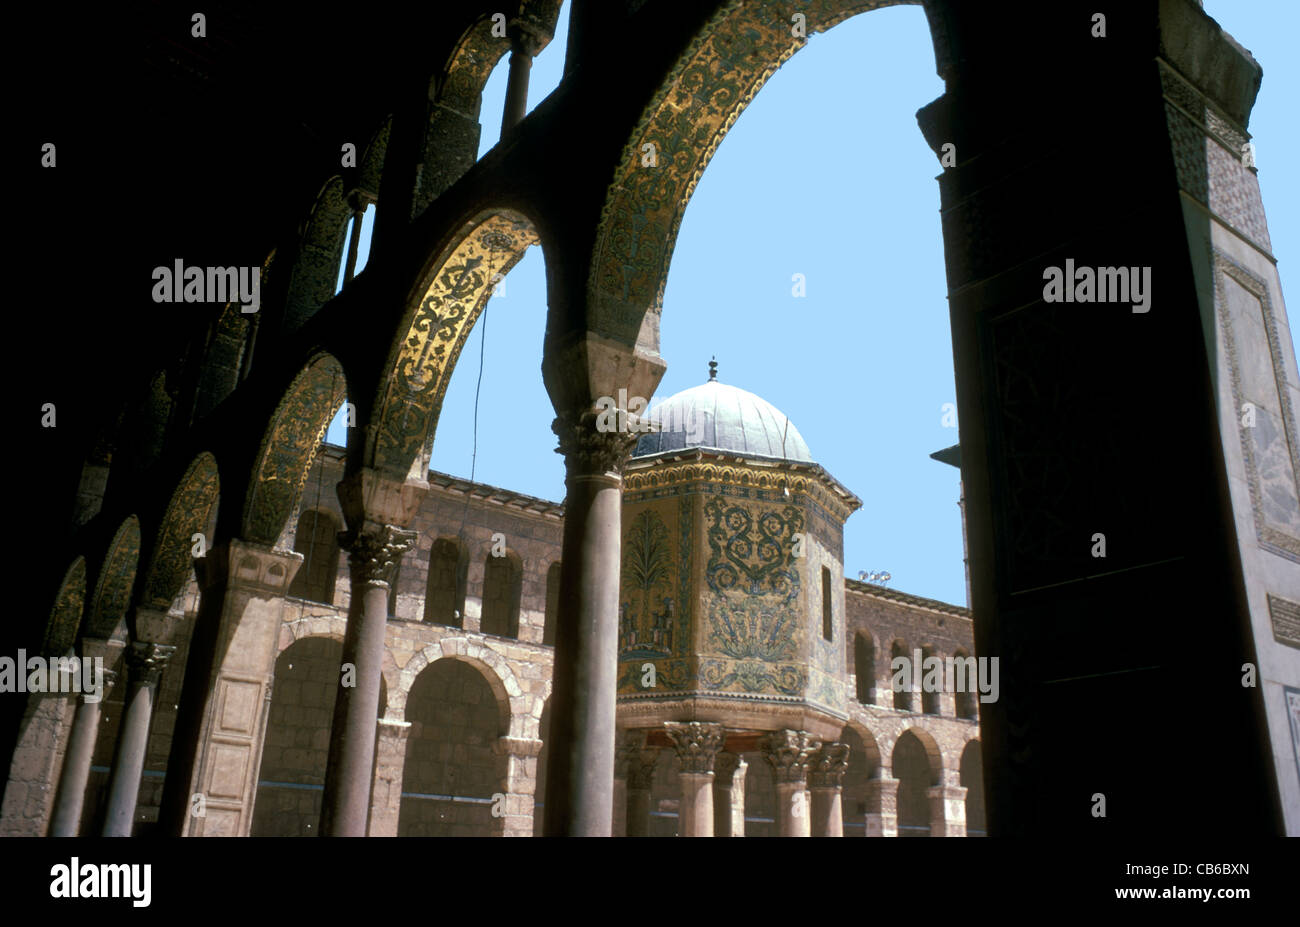 Umayyad Mosque courtyard with the Treasury, Damascus, Syria. Built 715CE. Stock Photo